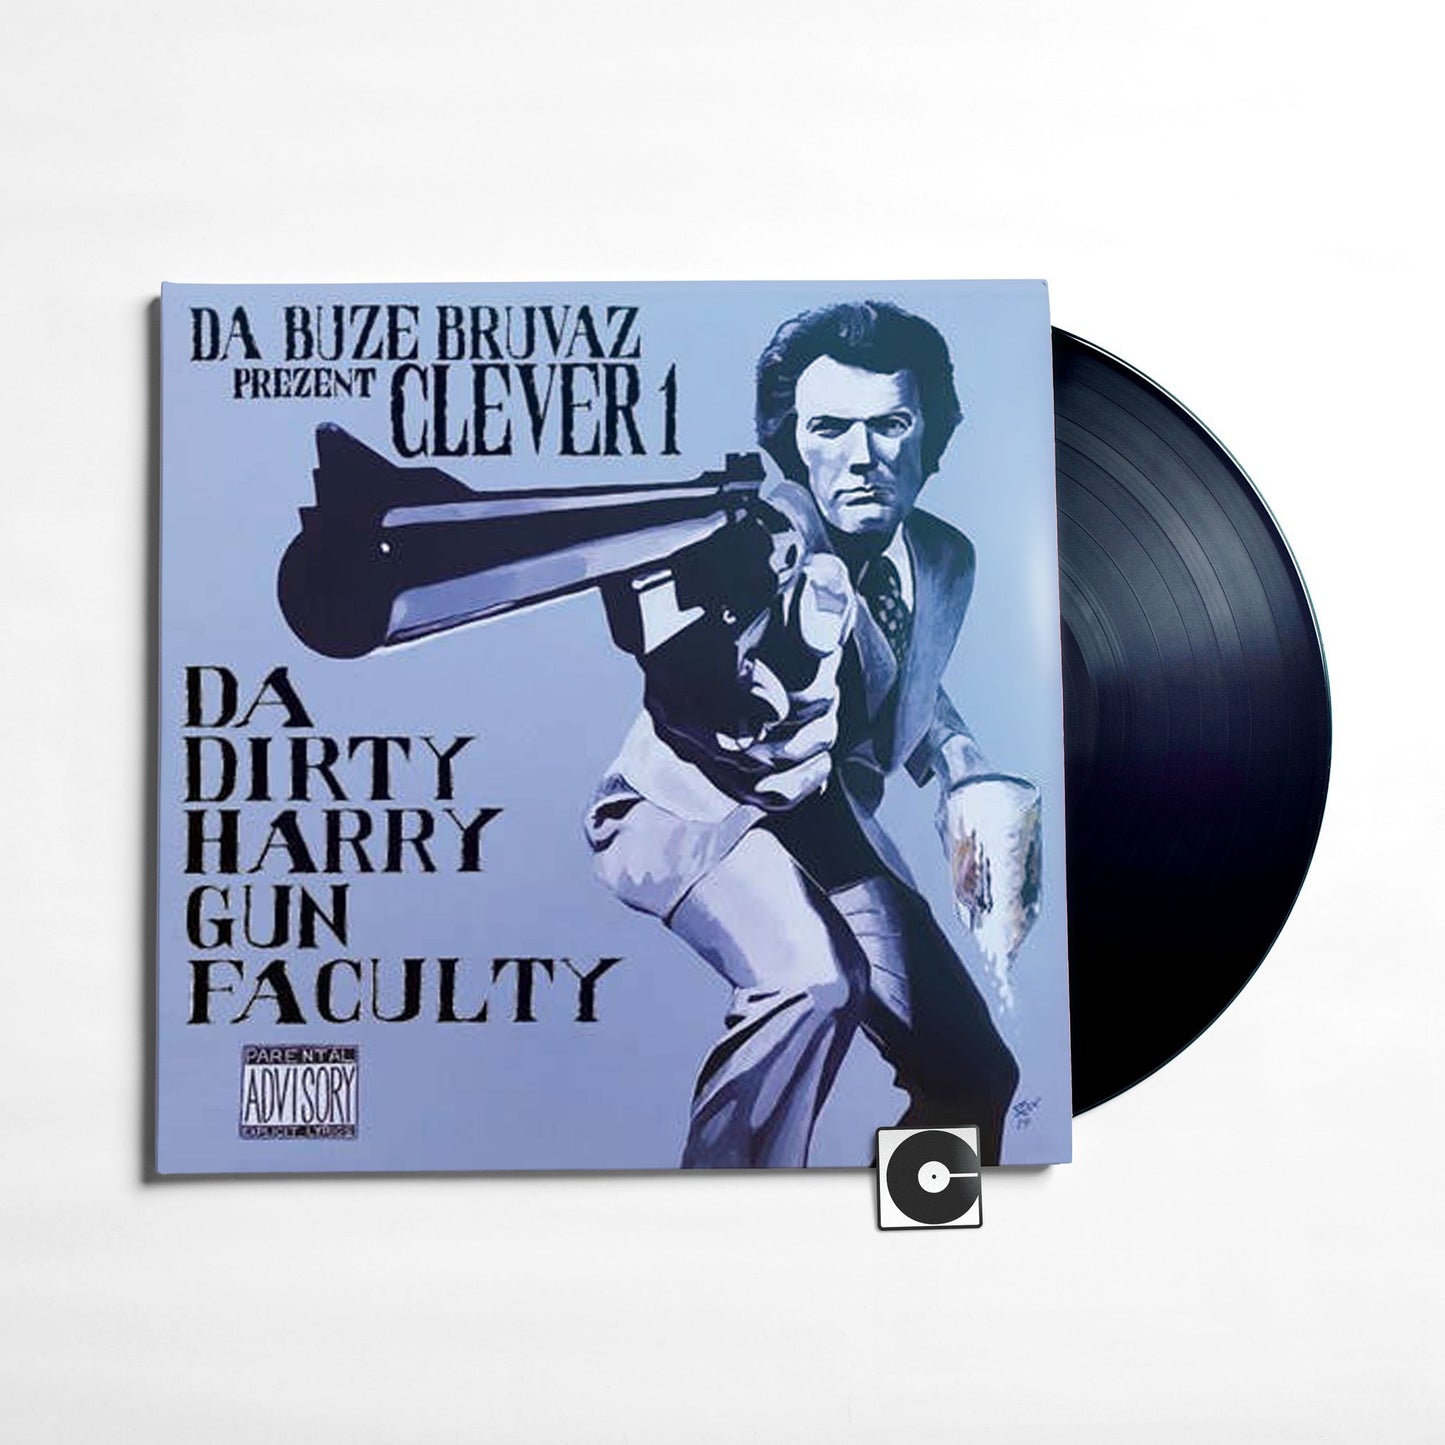 Clever 1 - "Da Buze Bruvaz Presents Clever 1: Da Dirty Harry Gun Faculty"